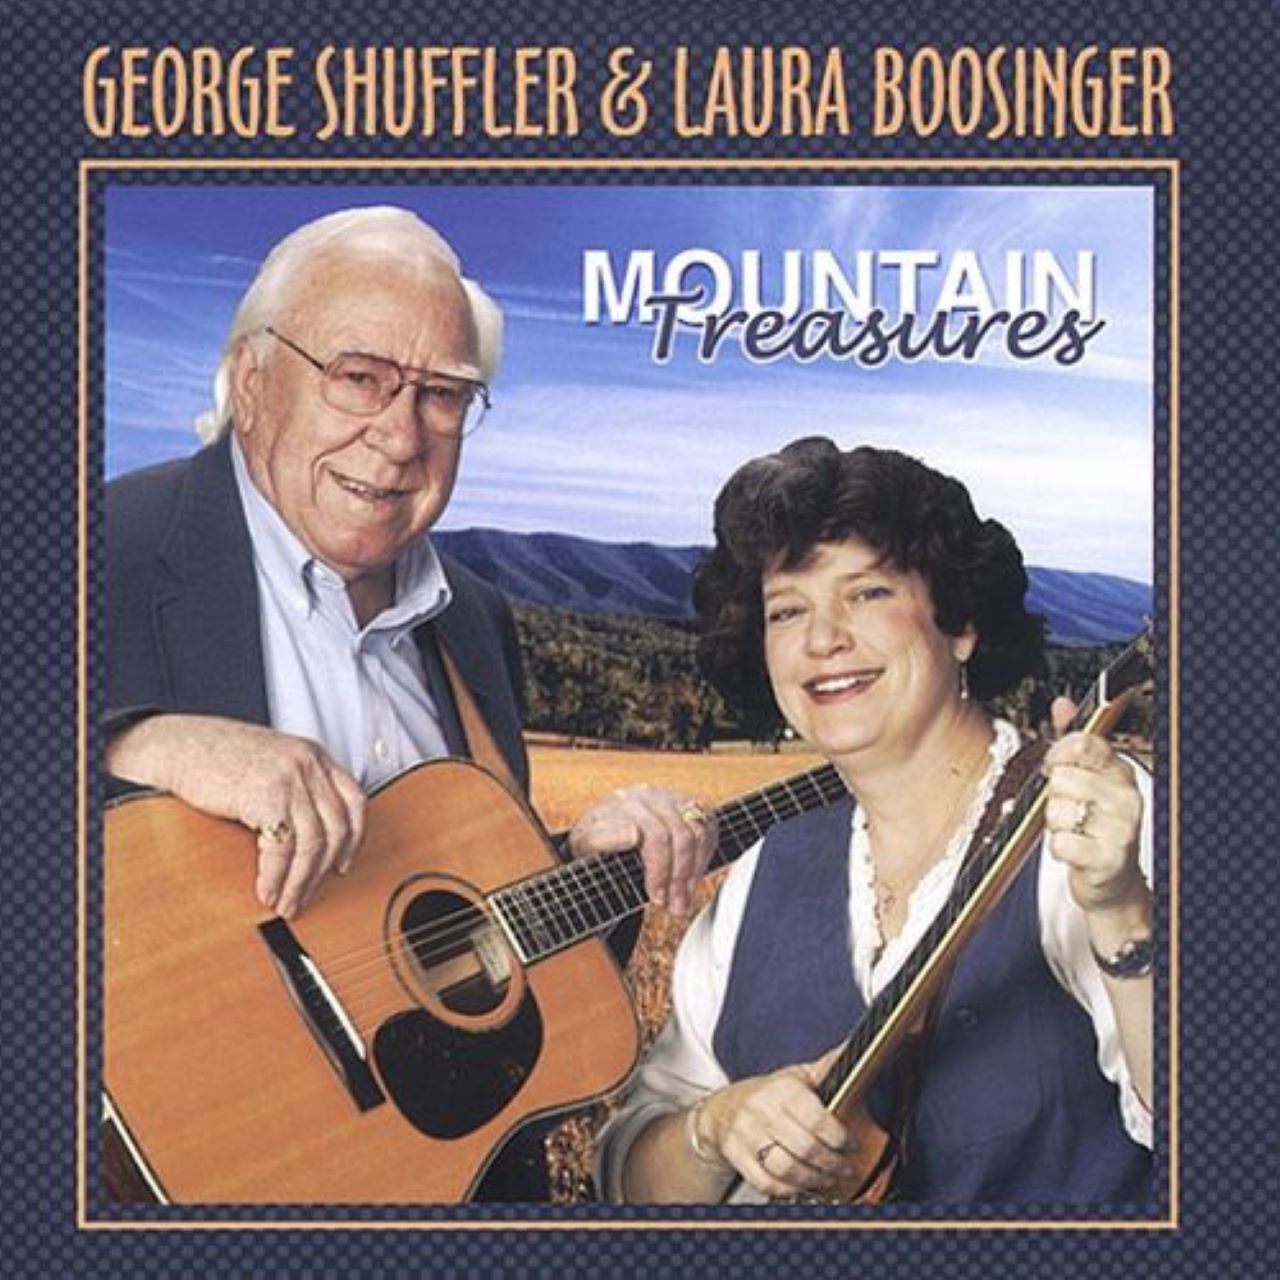 George Shuffler & Laura Boosinger - Mountain Treasures cover album